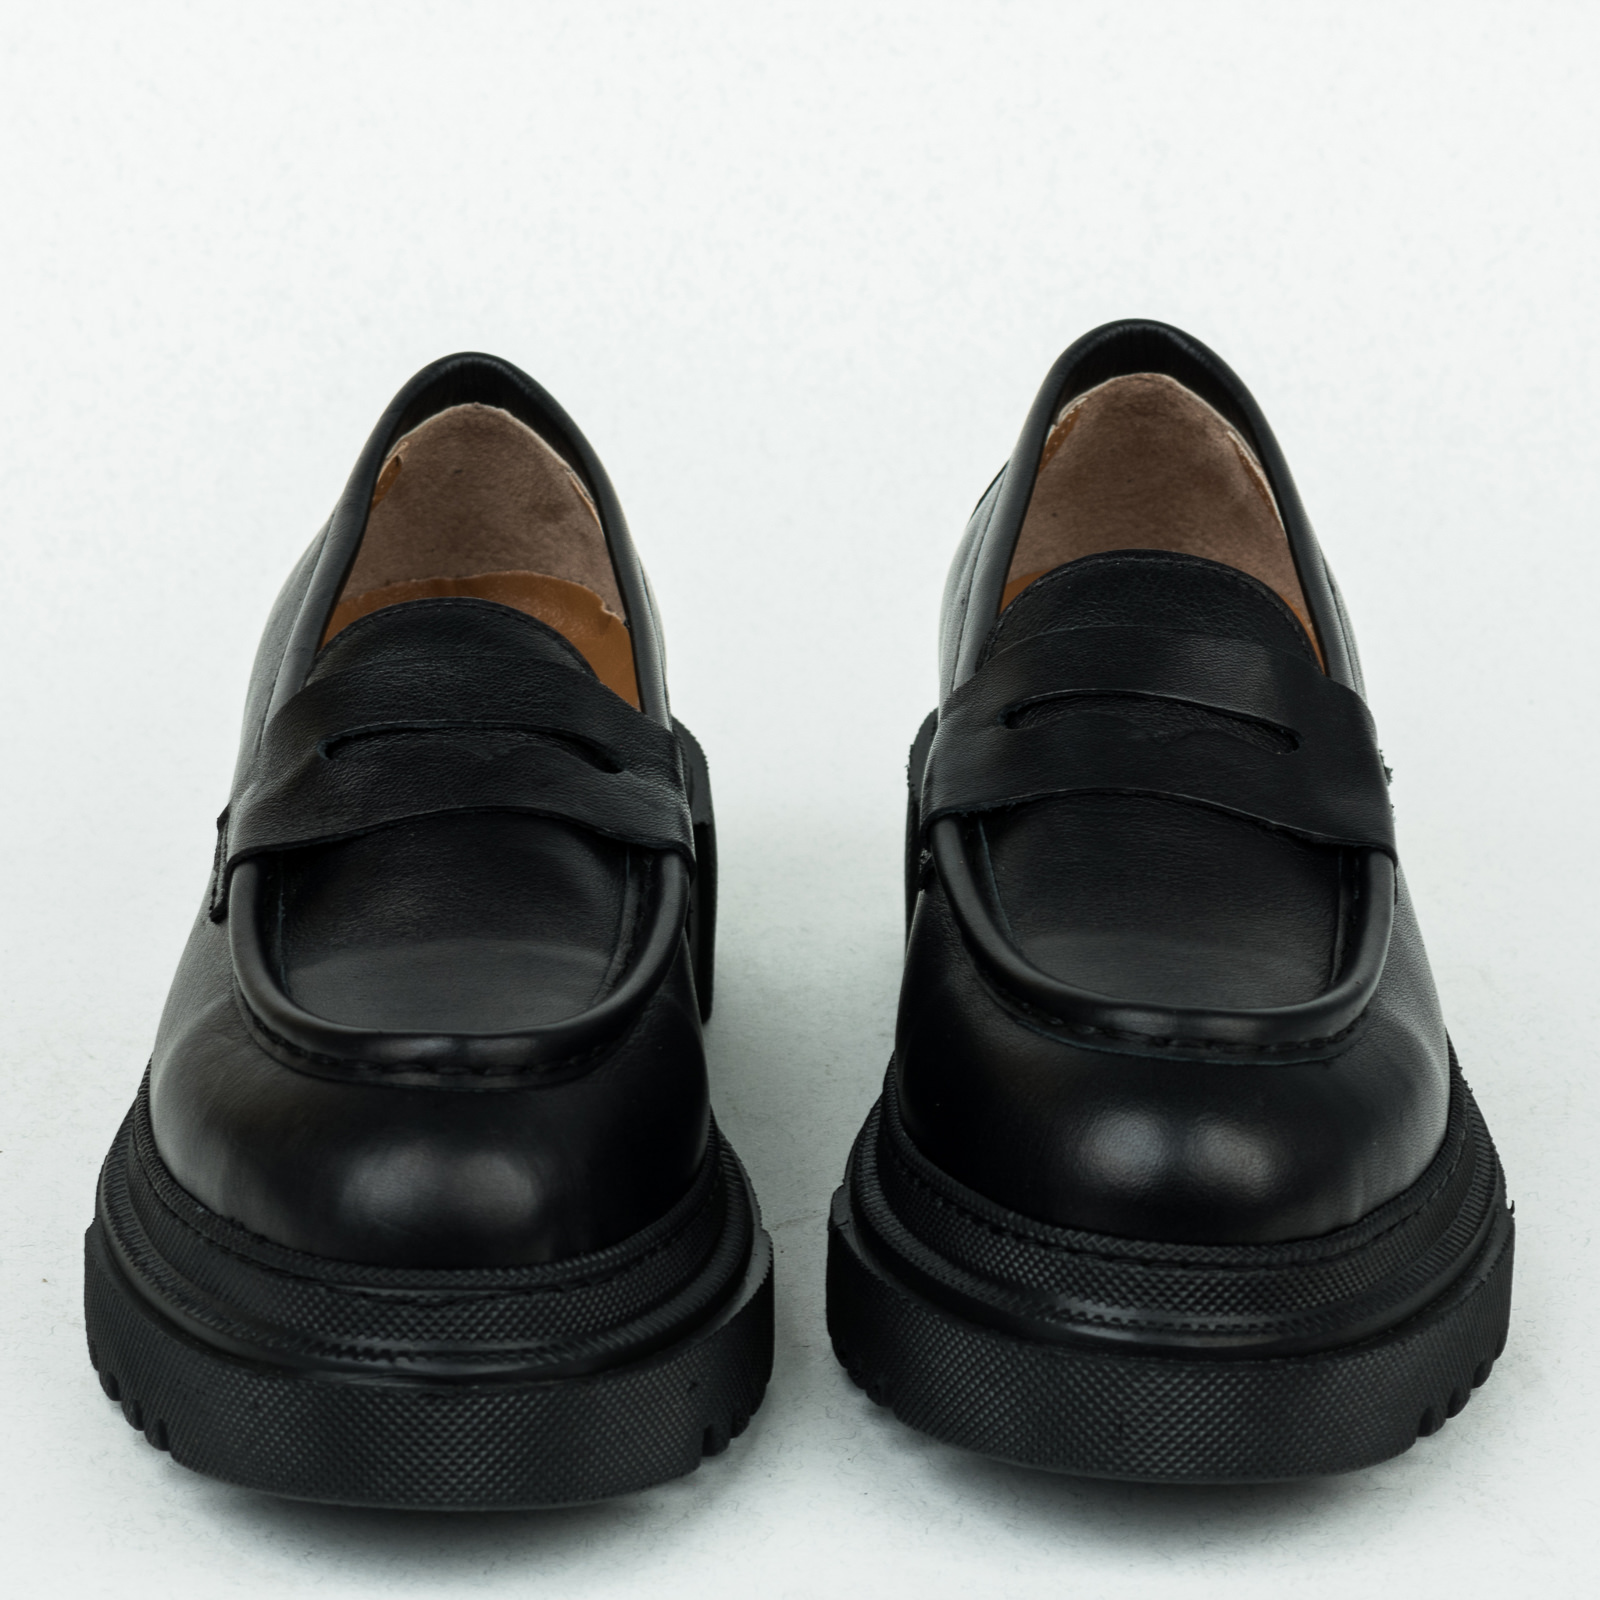 Leather shoes & flats B188 - BLACK